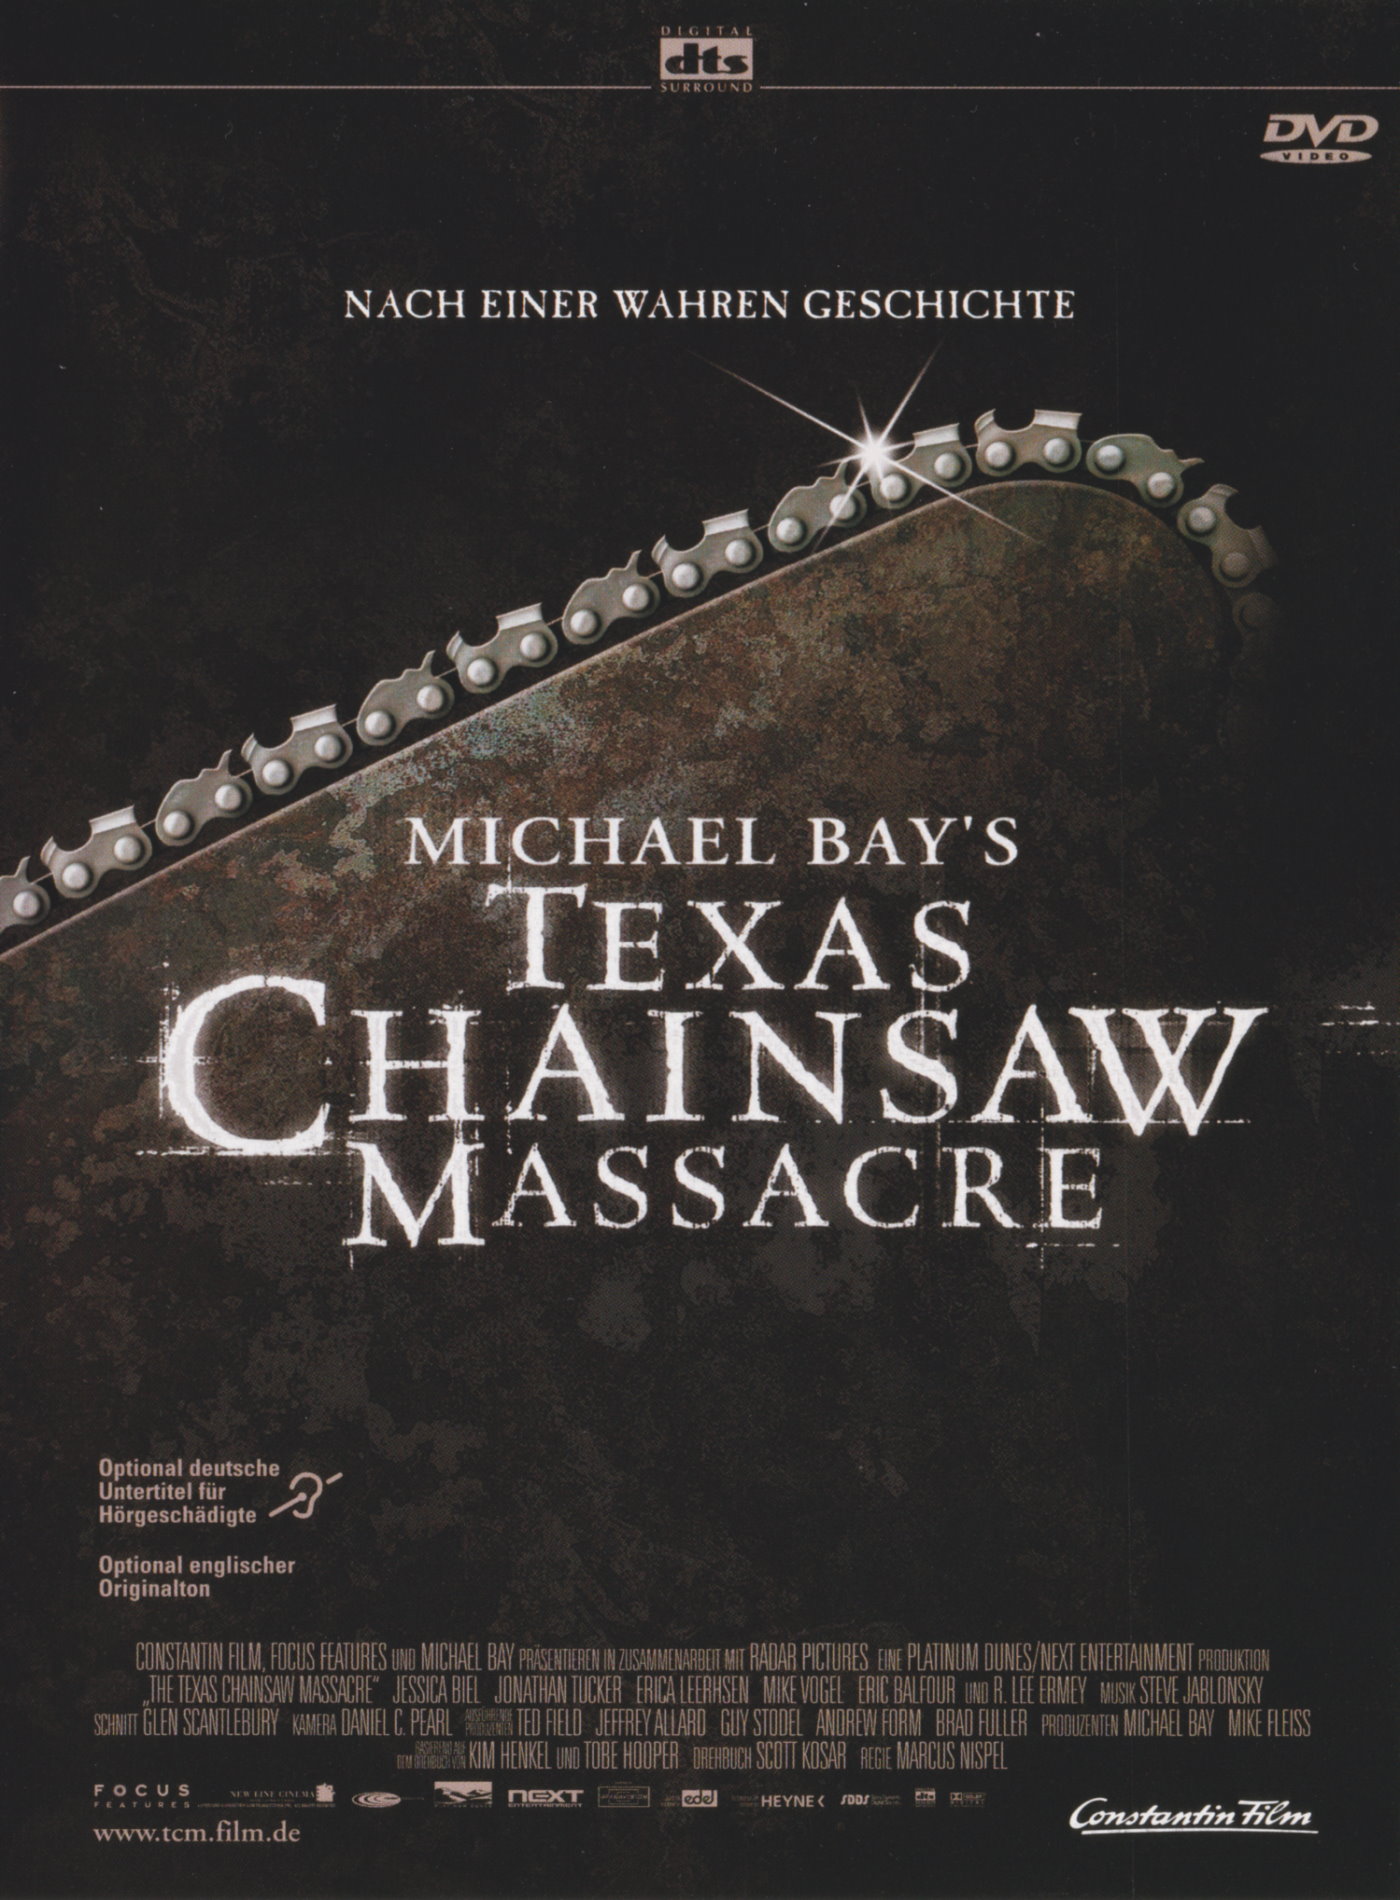 Cover - Texas Chainsaw Massacre.jpg